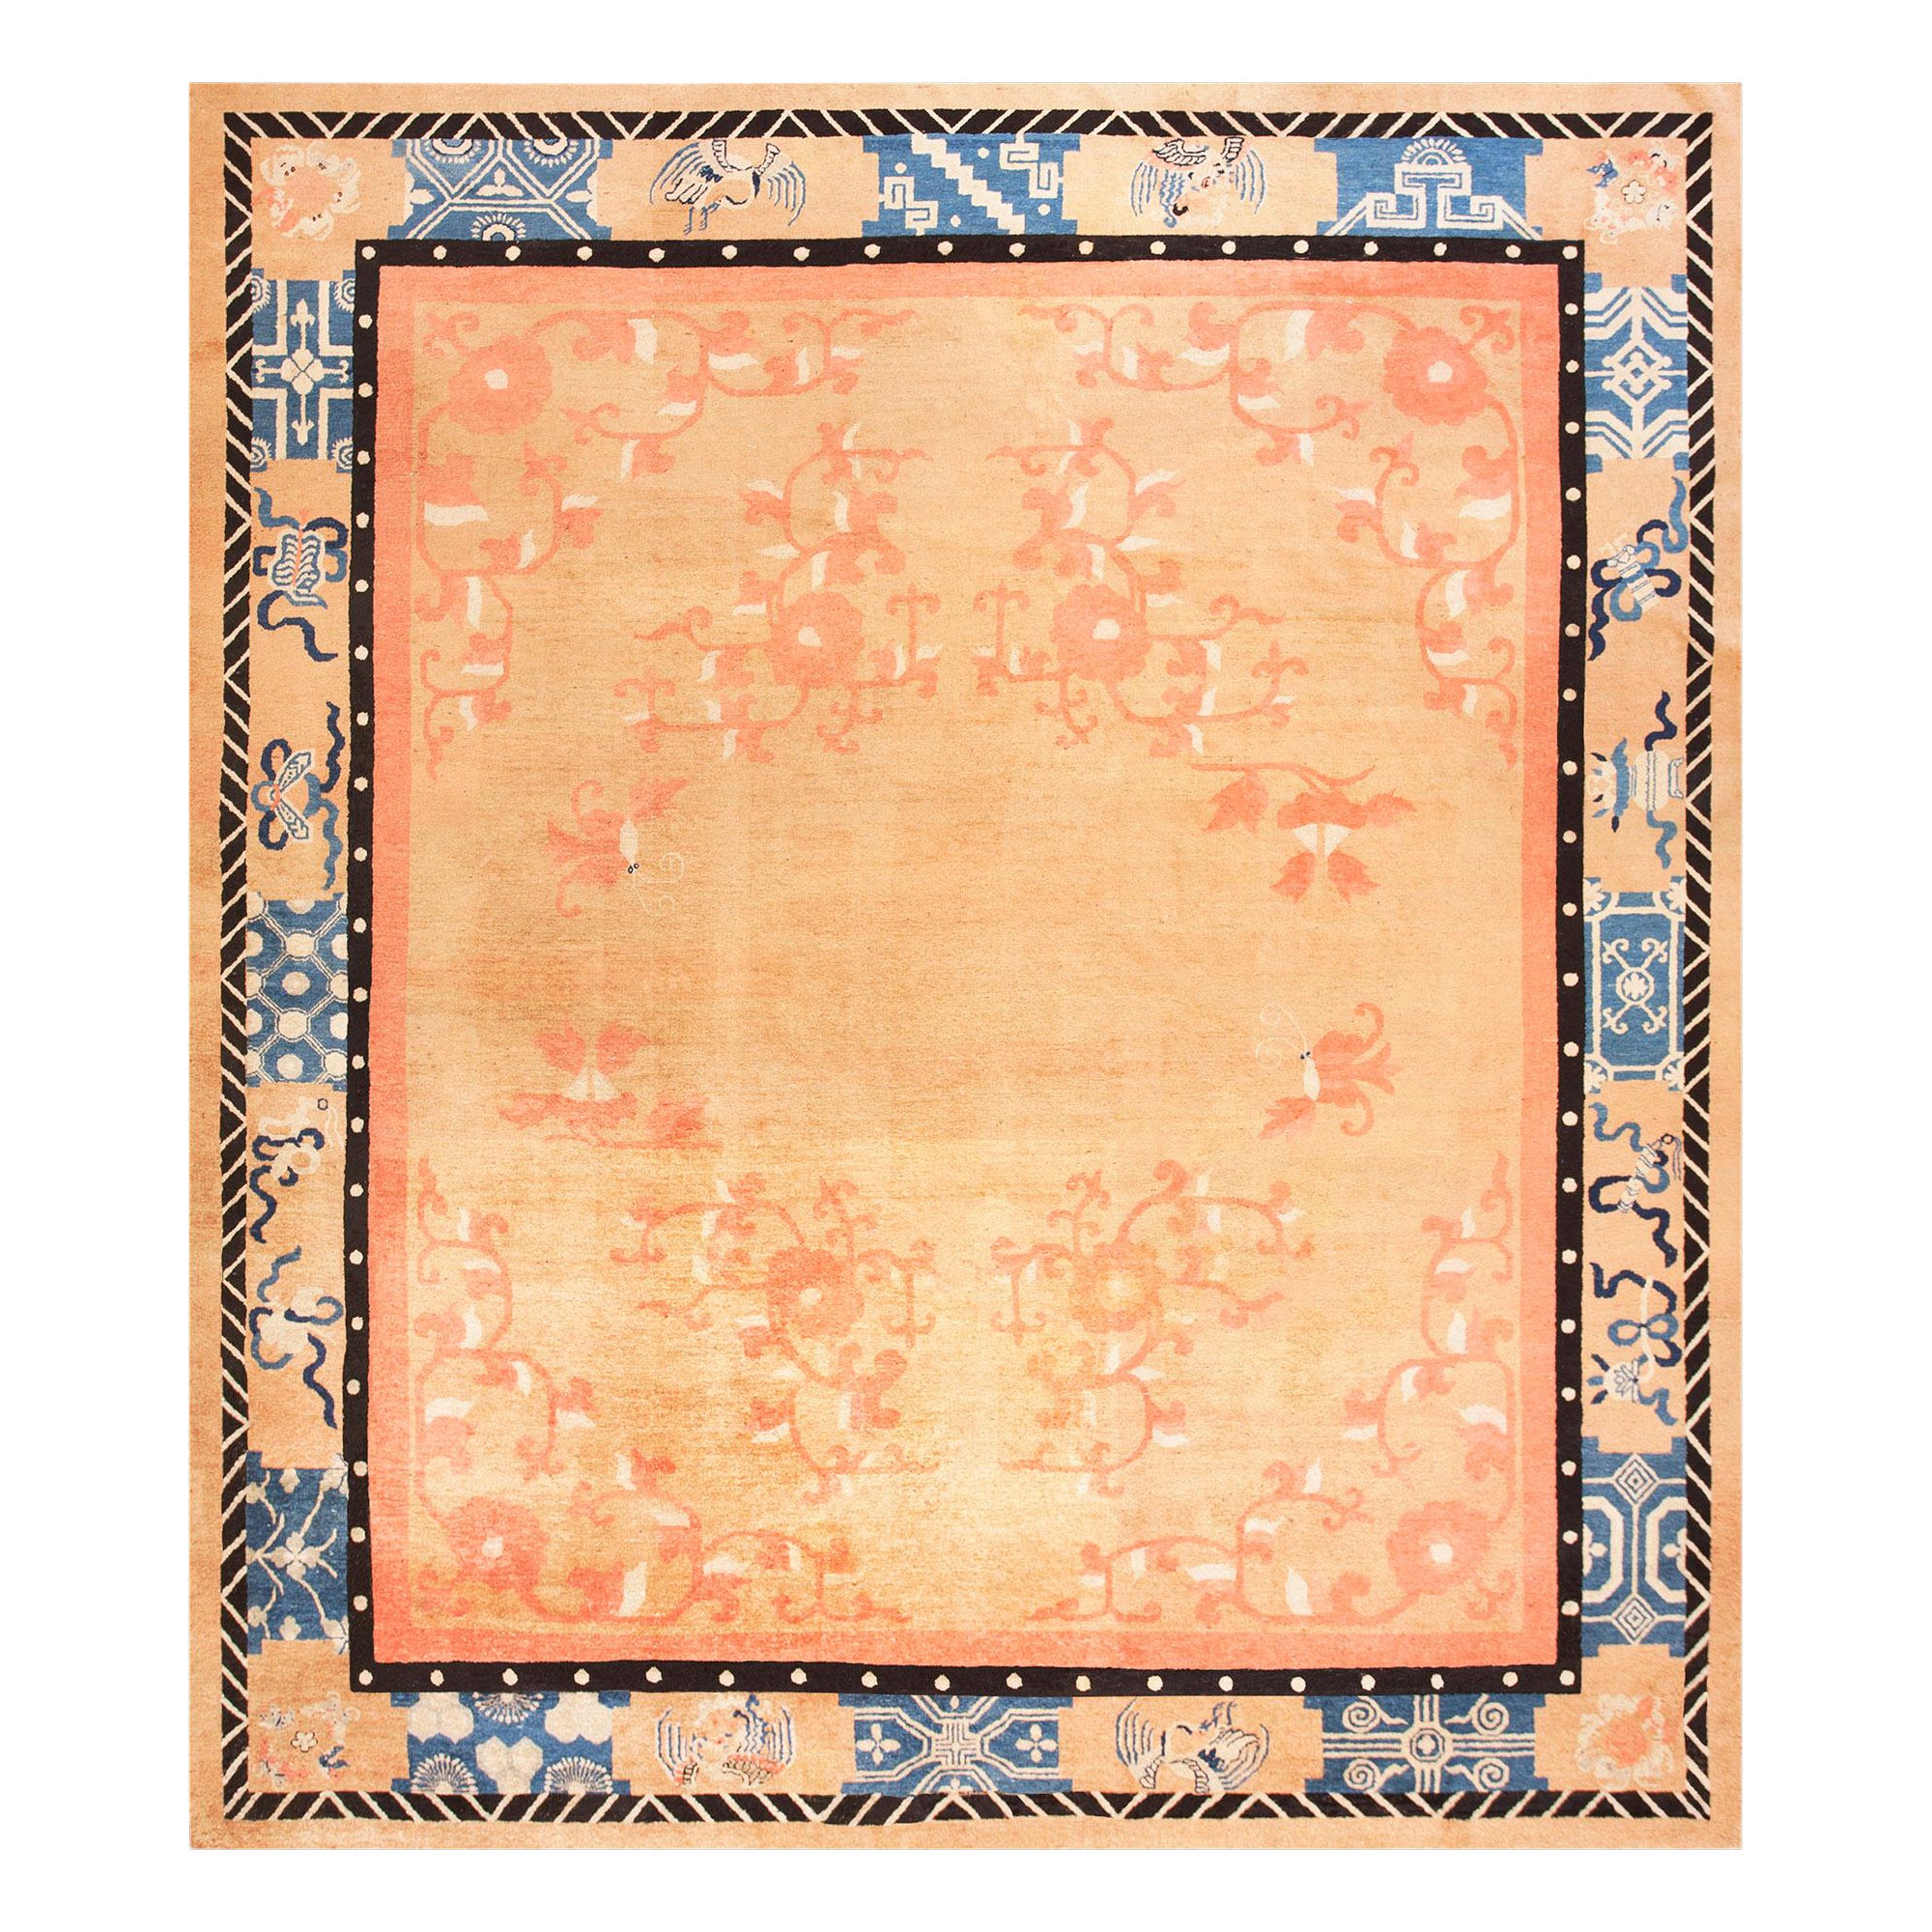 19th Century Chinese Peking Carpet ( 10' x 11'6" - 305 x 350 )